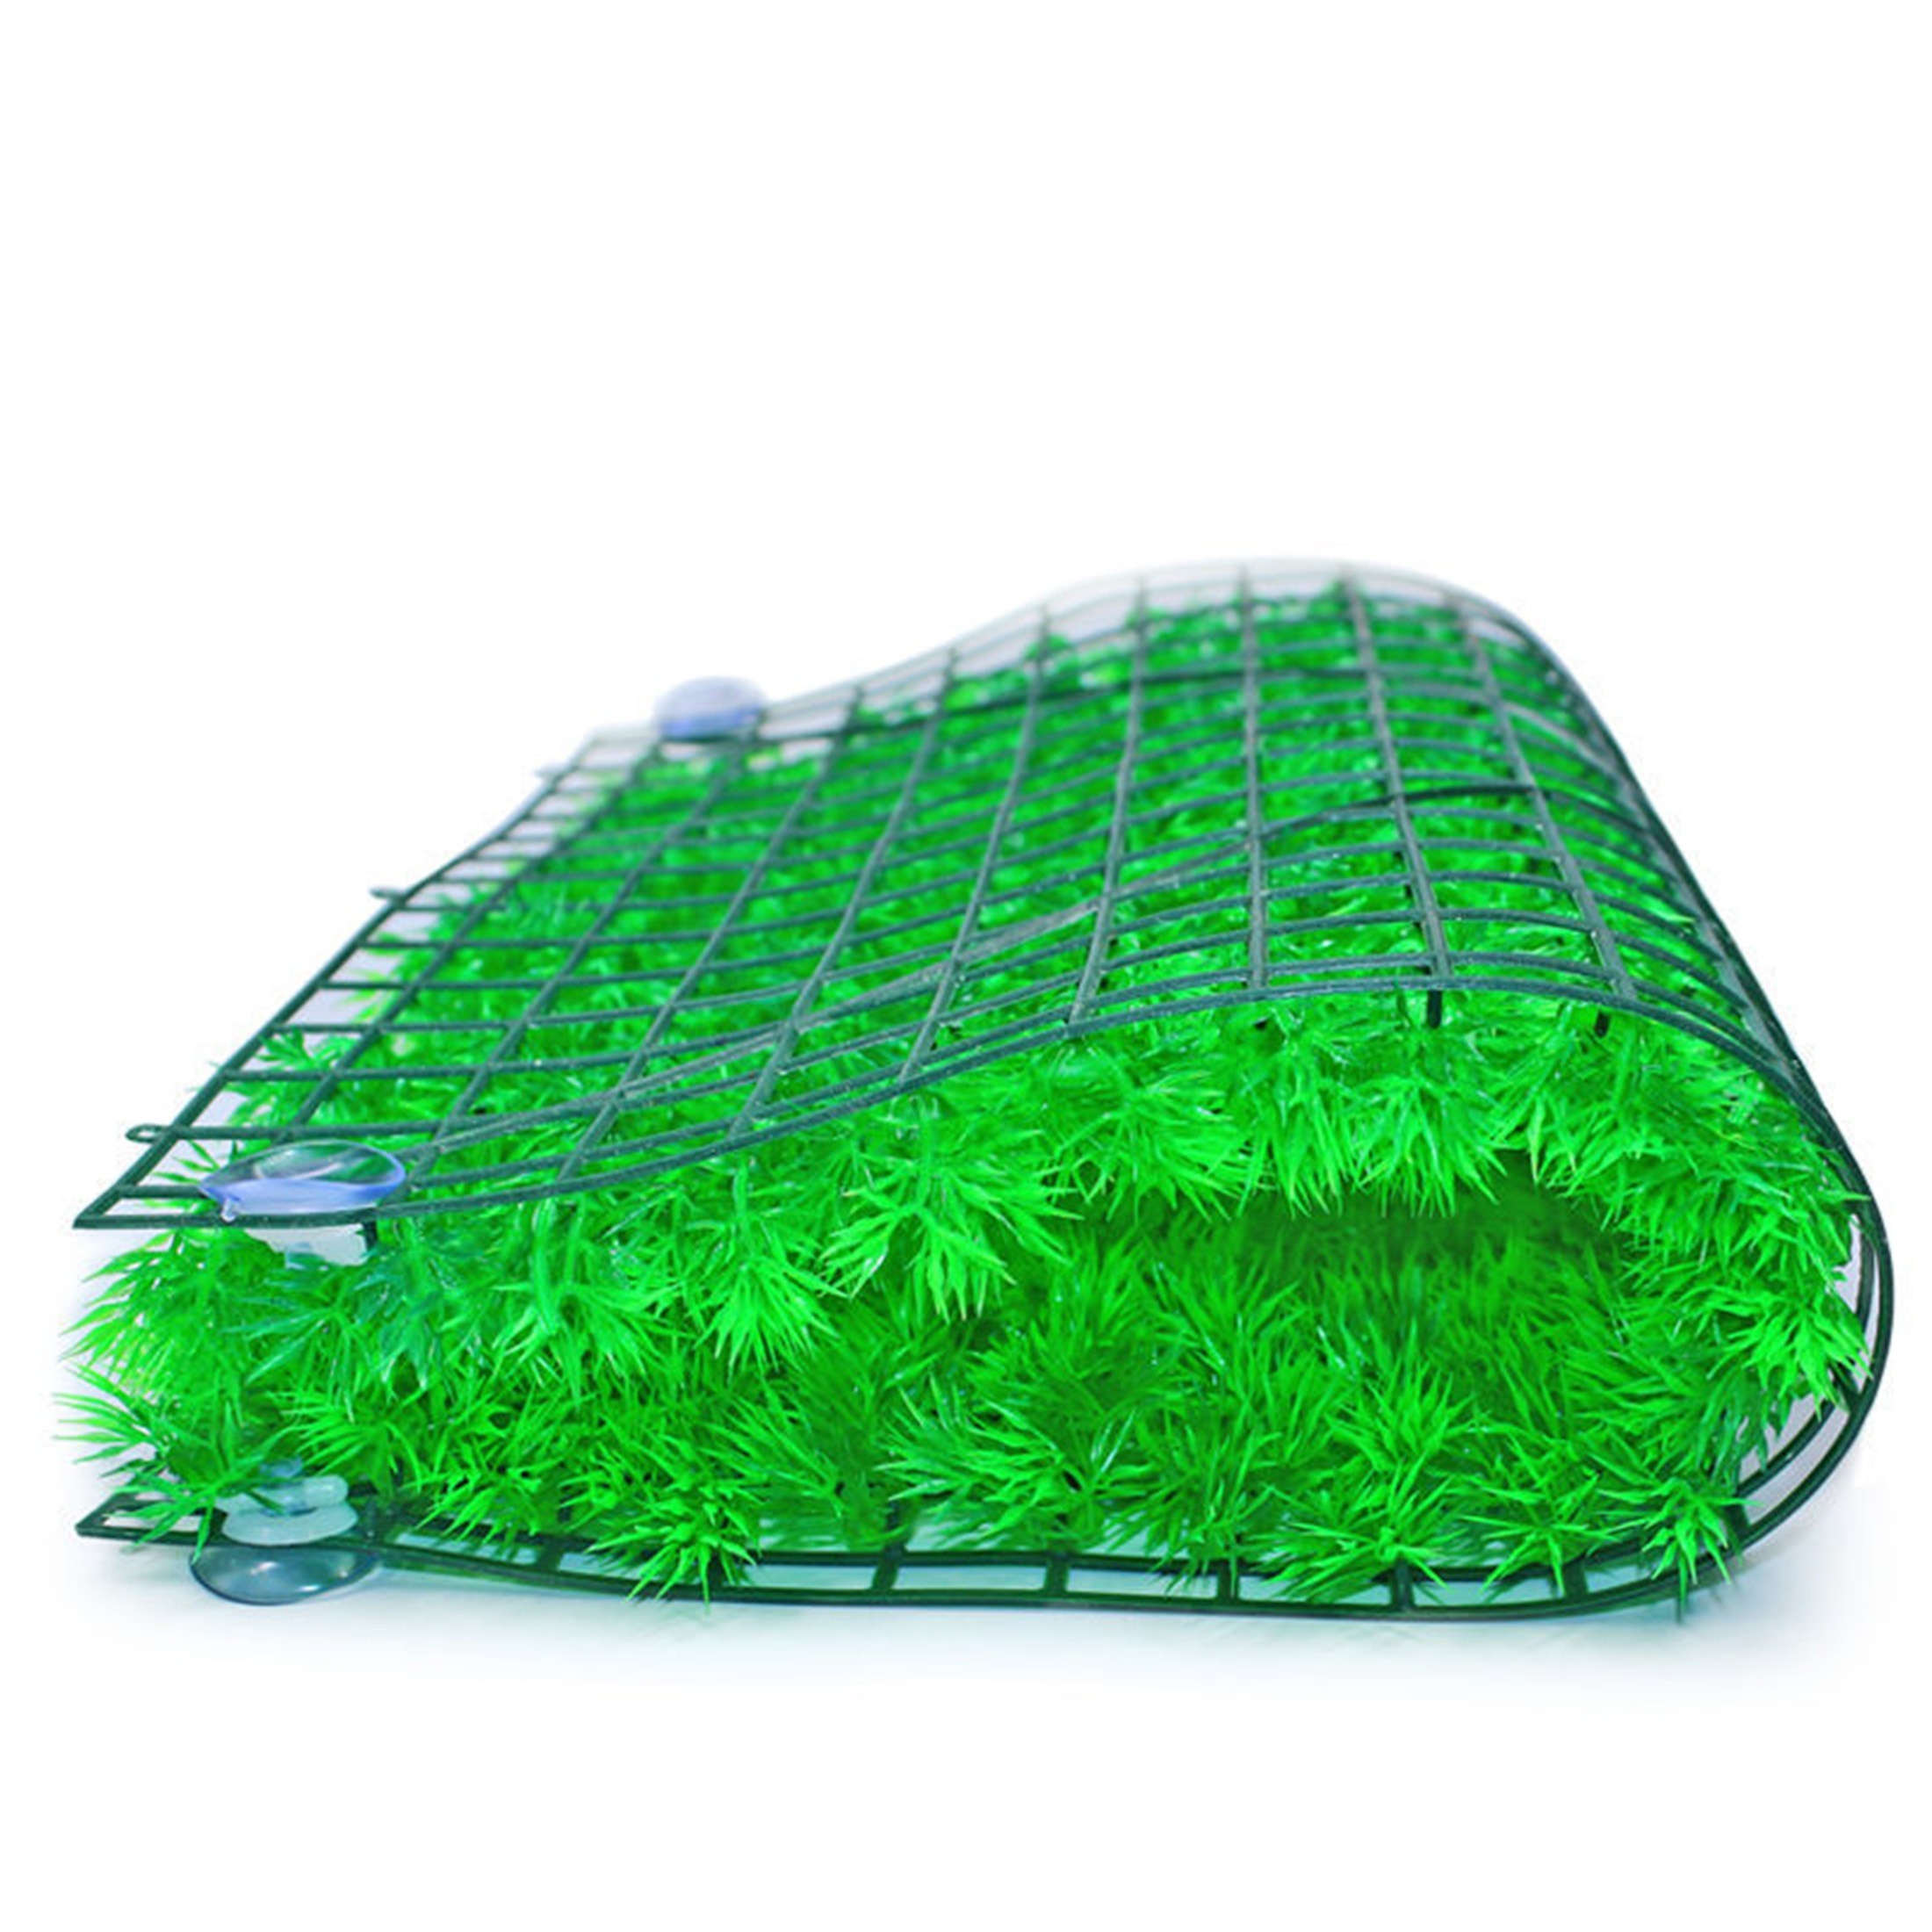 

1pc Artificial Aquarium Grass Mat, Non-toxic Green Faux Turf, Easy To Trim, Fish Tank & Home Decor Accessory